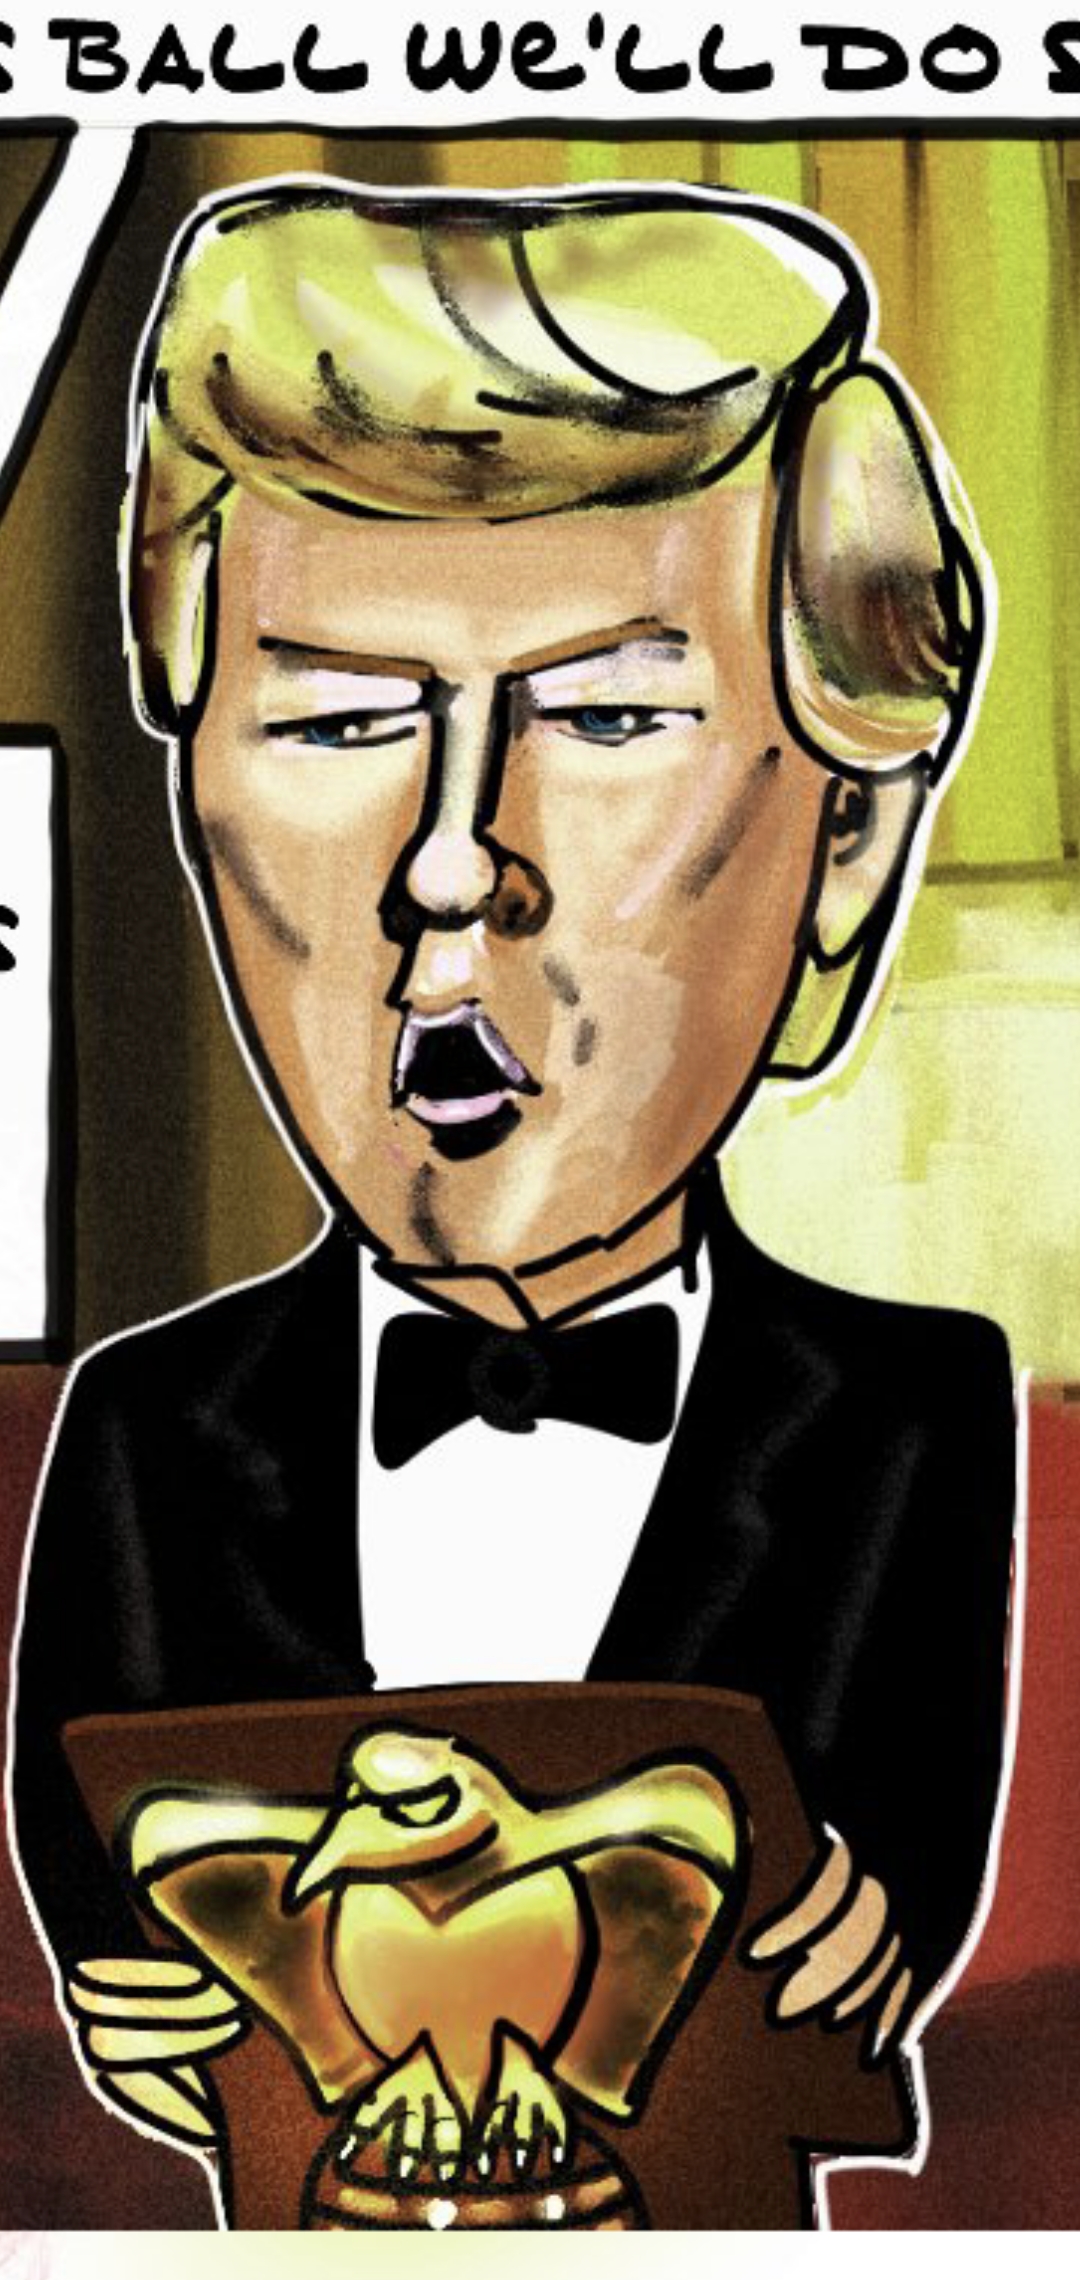 President Donald Trump Melania Trump Governor’s Ball 2020 White House Political cartoon post thumbnail image